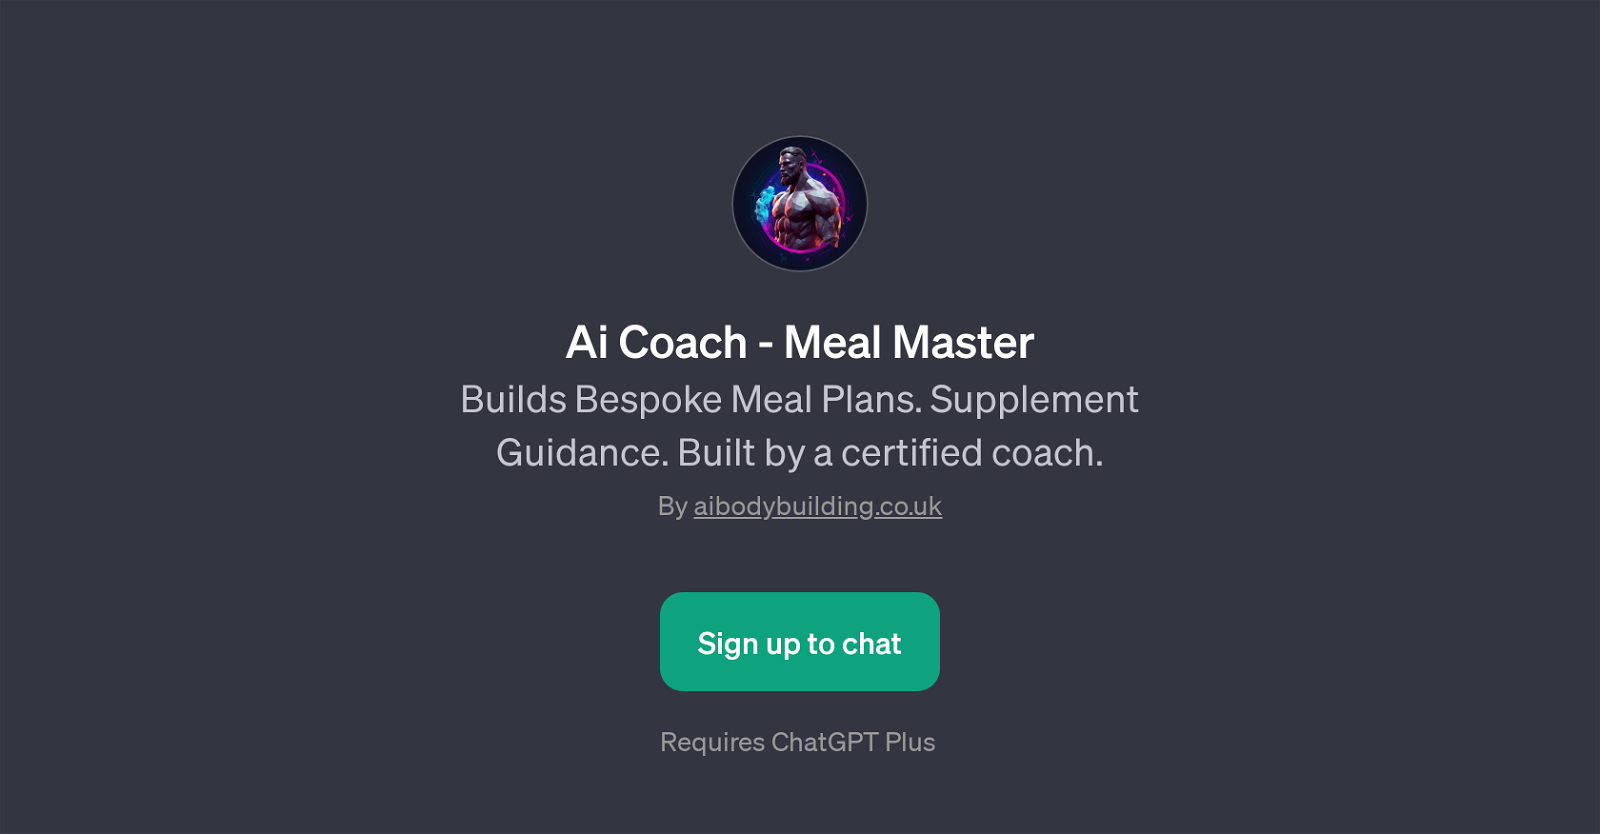 Ai Coach - Meal Master website